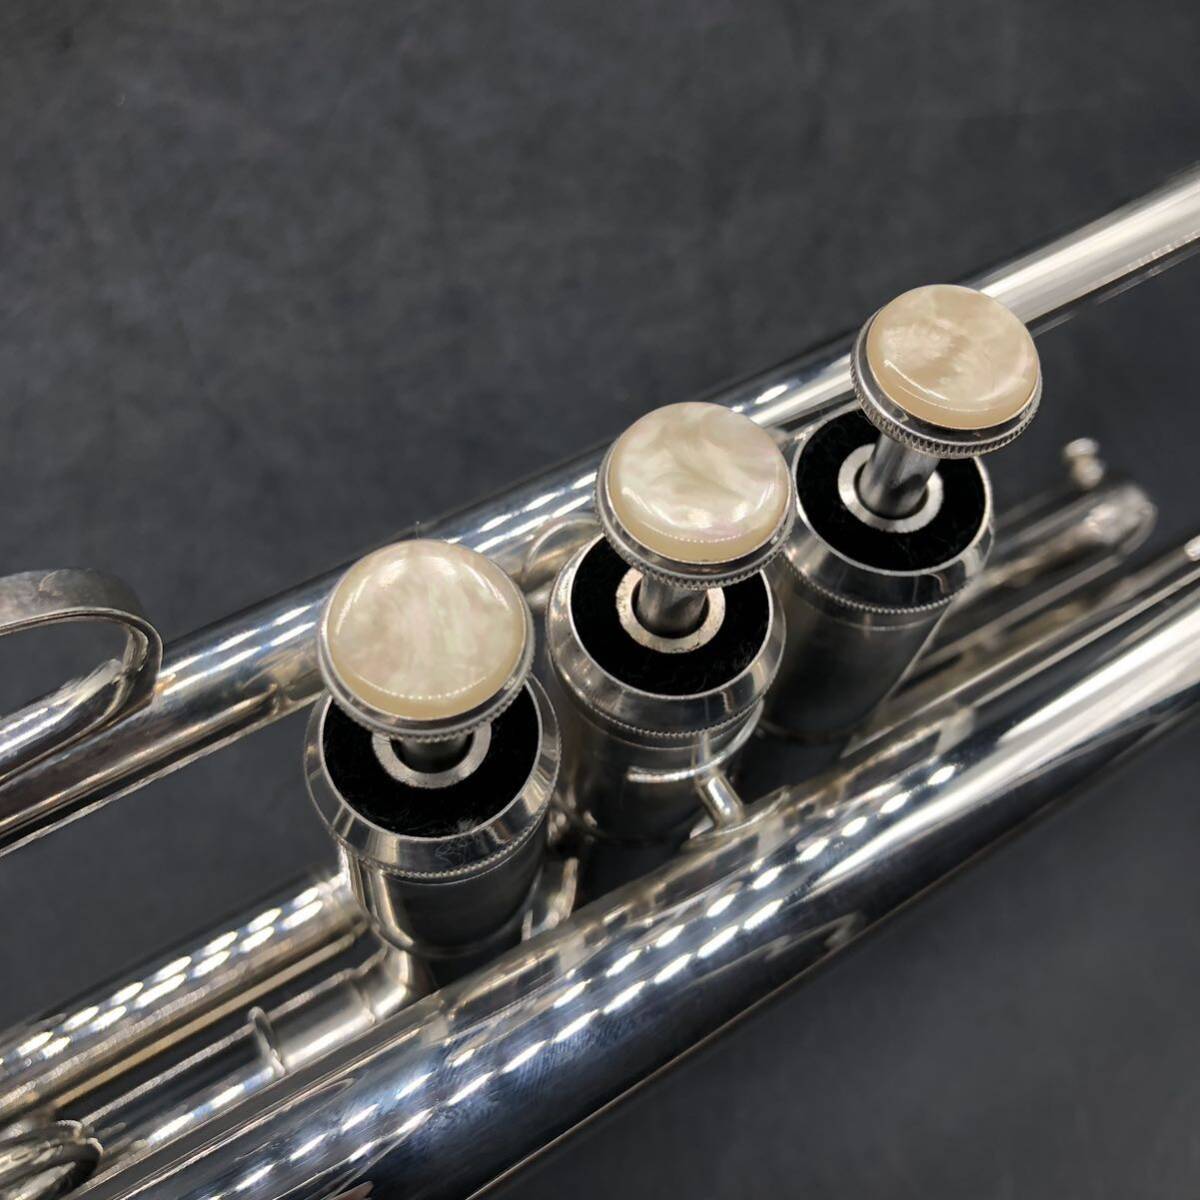 438 Heinrich トランペット IH02018 管楽器 金管楽器 吹奏楽器 音楽 演奏 ケース付 ハードケース付の画像8